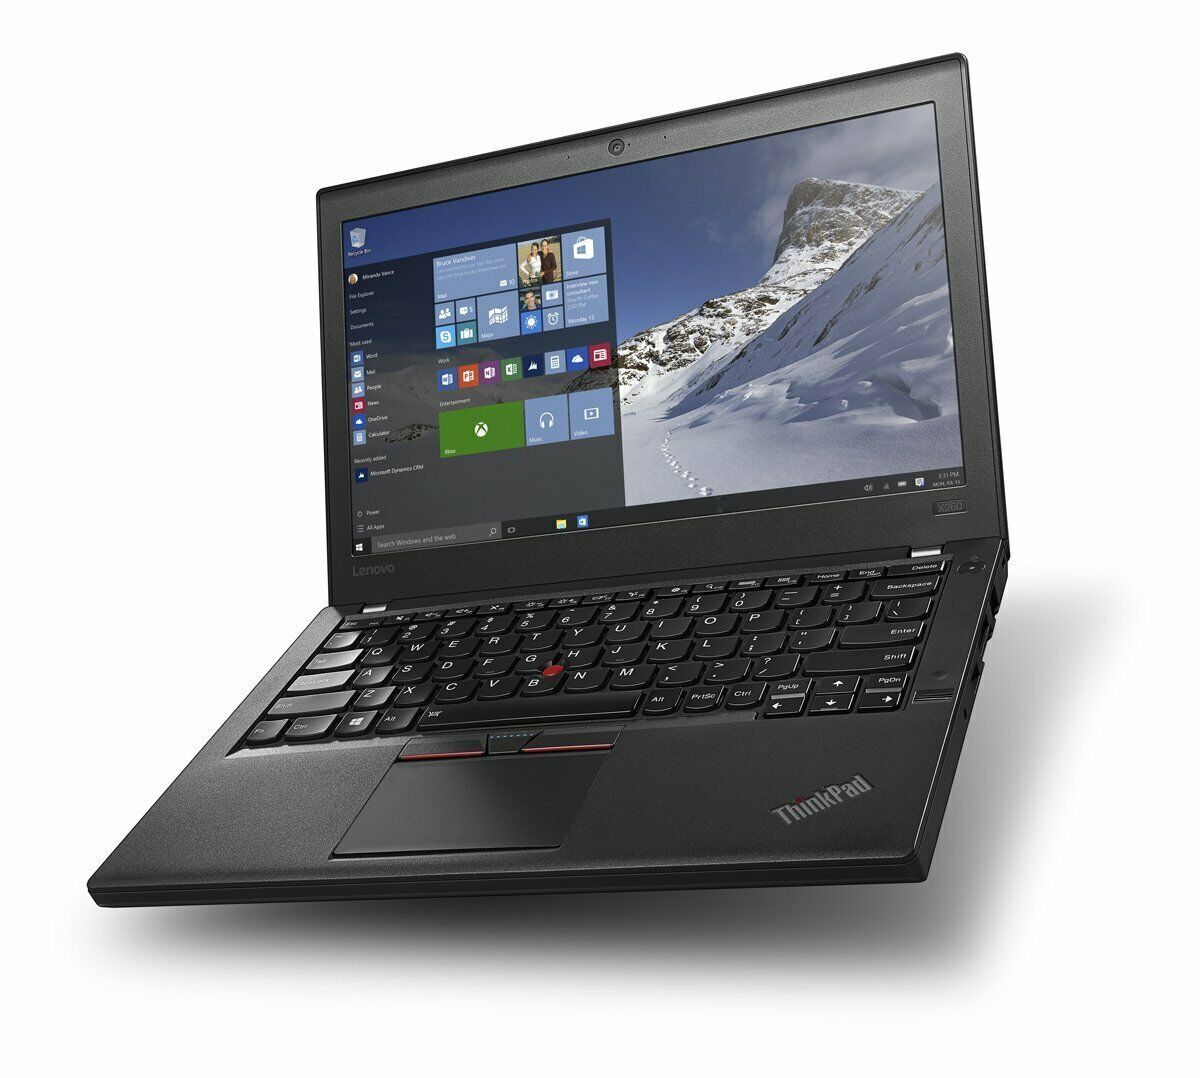 Lenovo ThinkPad X270 i5 6300u 2.40Ghz 8GB RAM 256GB SSD 12.5